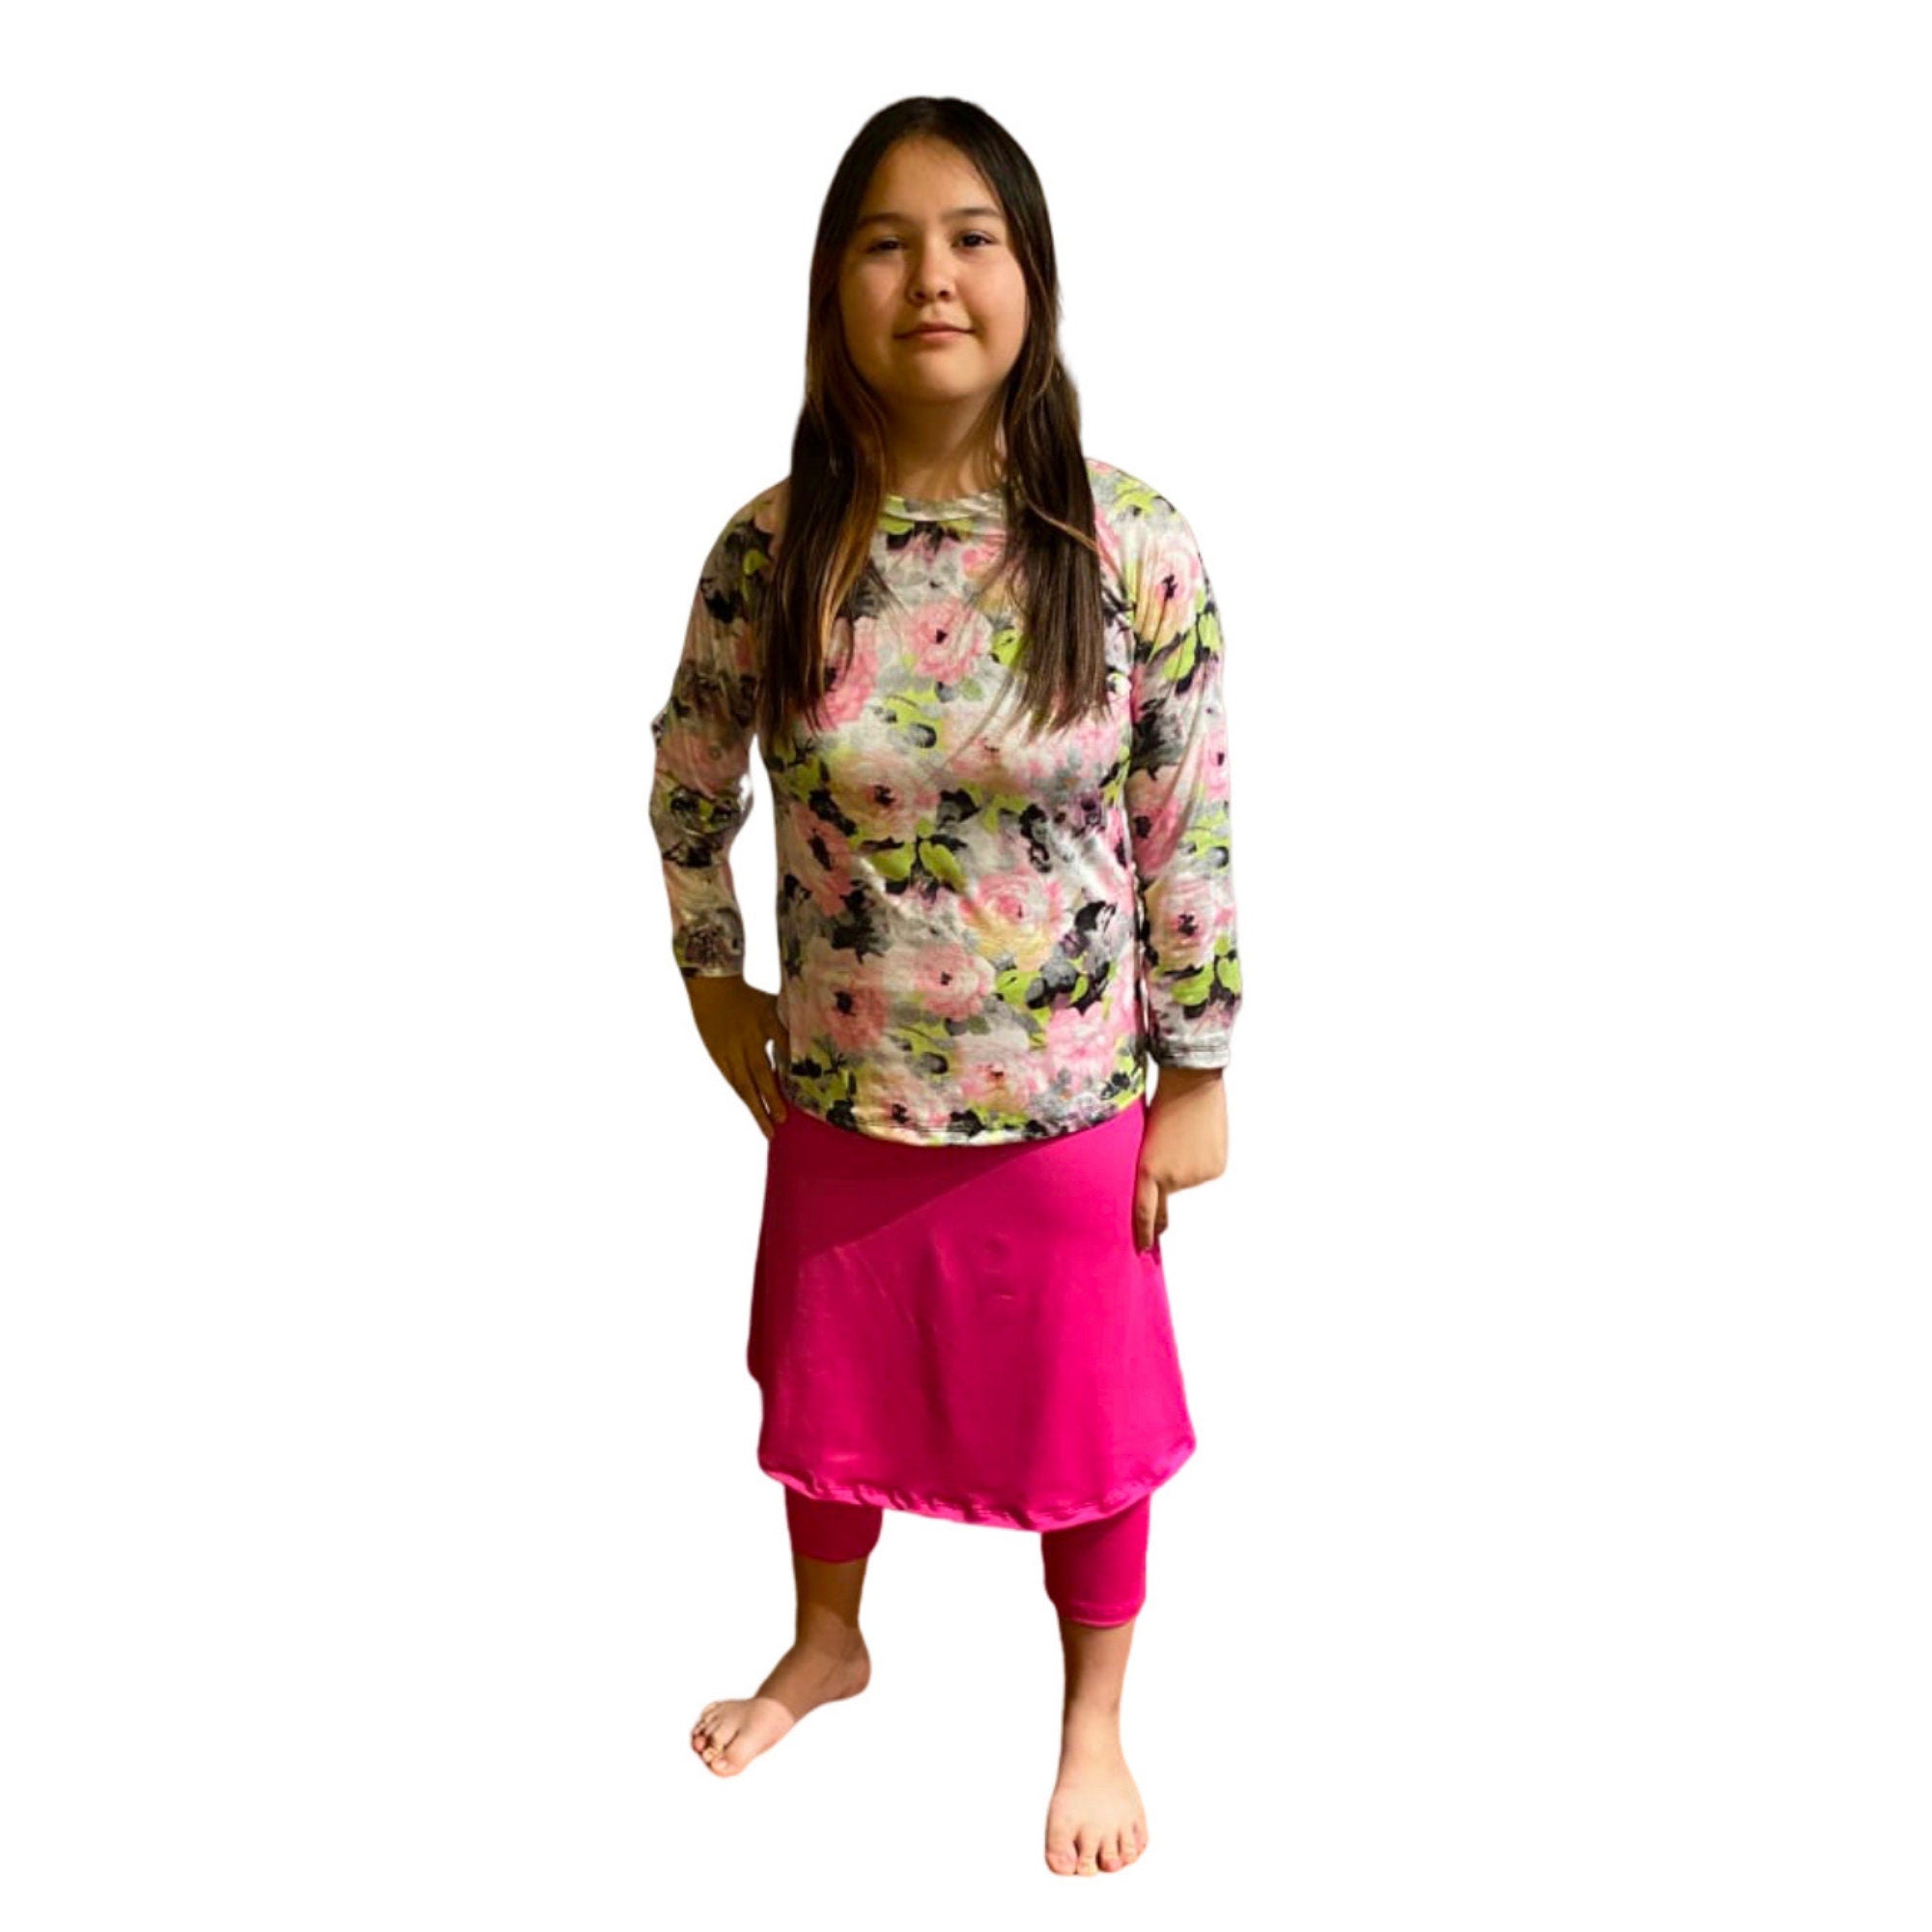 Lululemon Brand|women's Yoga Pants With Tennis Skirt - Slim Fit Gym Leggings